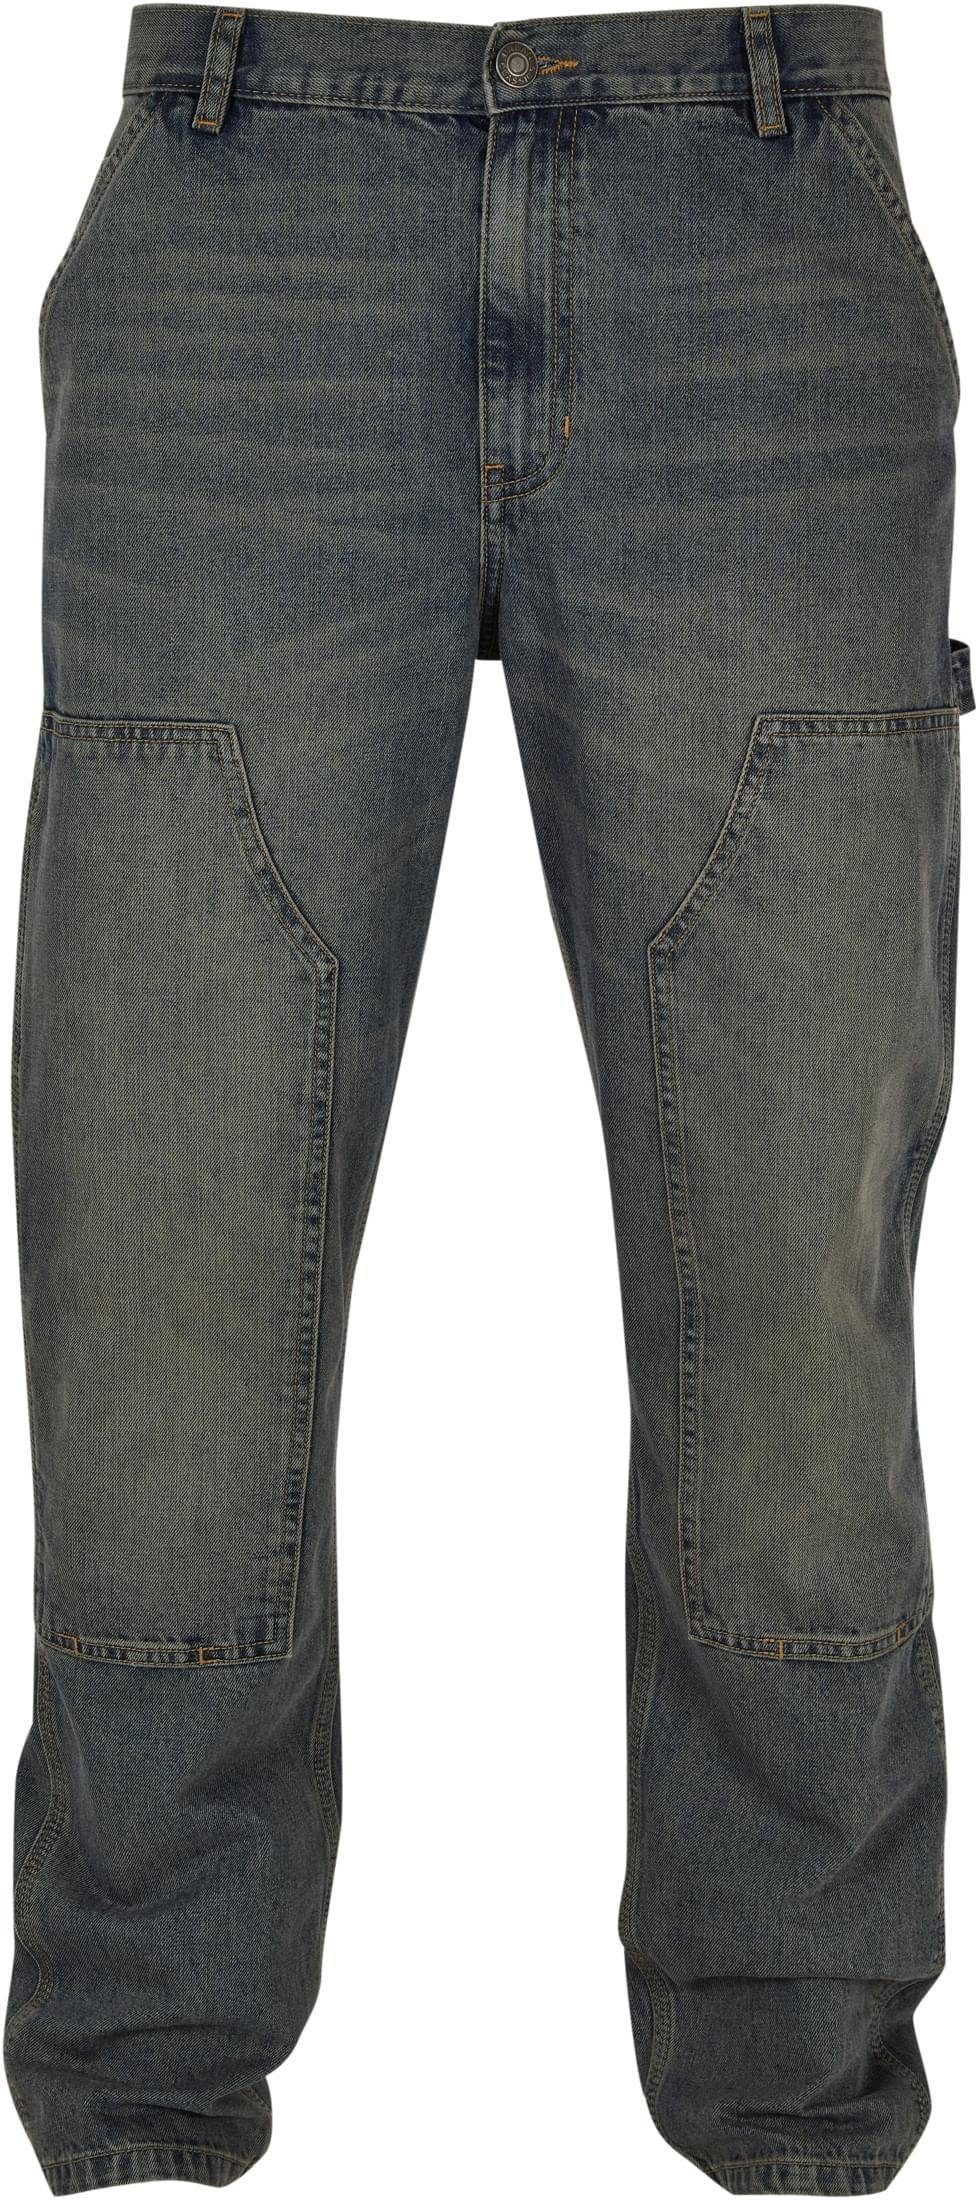 URBAN CLASSICS Funktionshose Double Knee Jeans